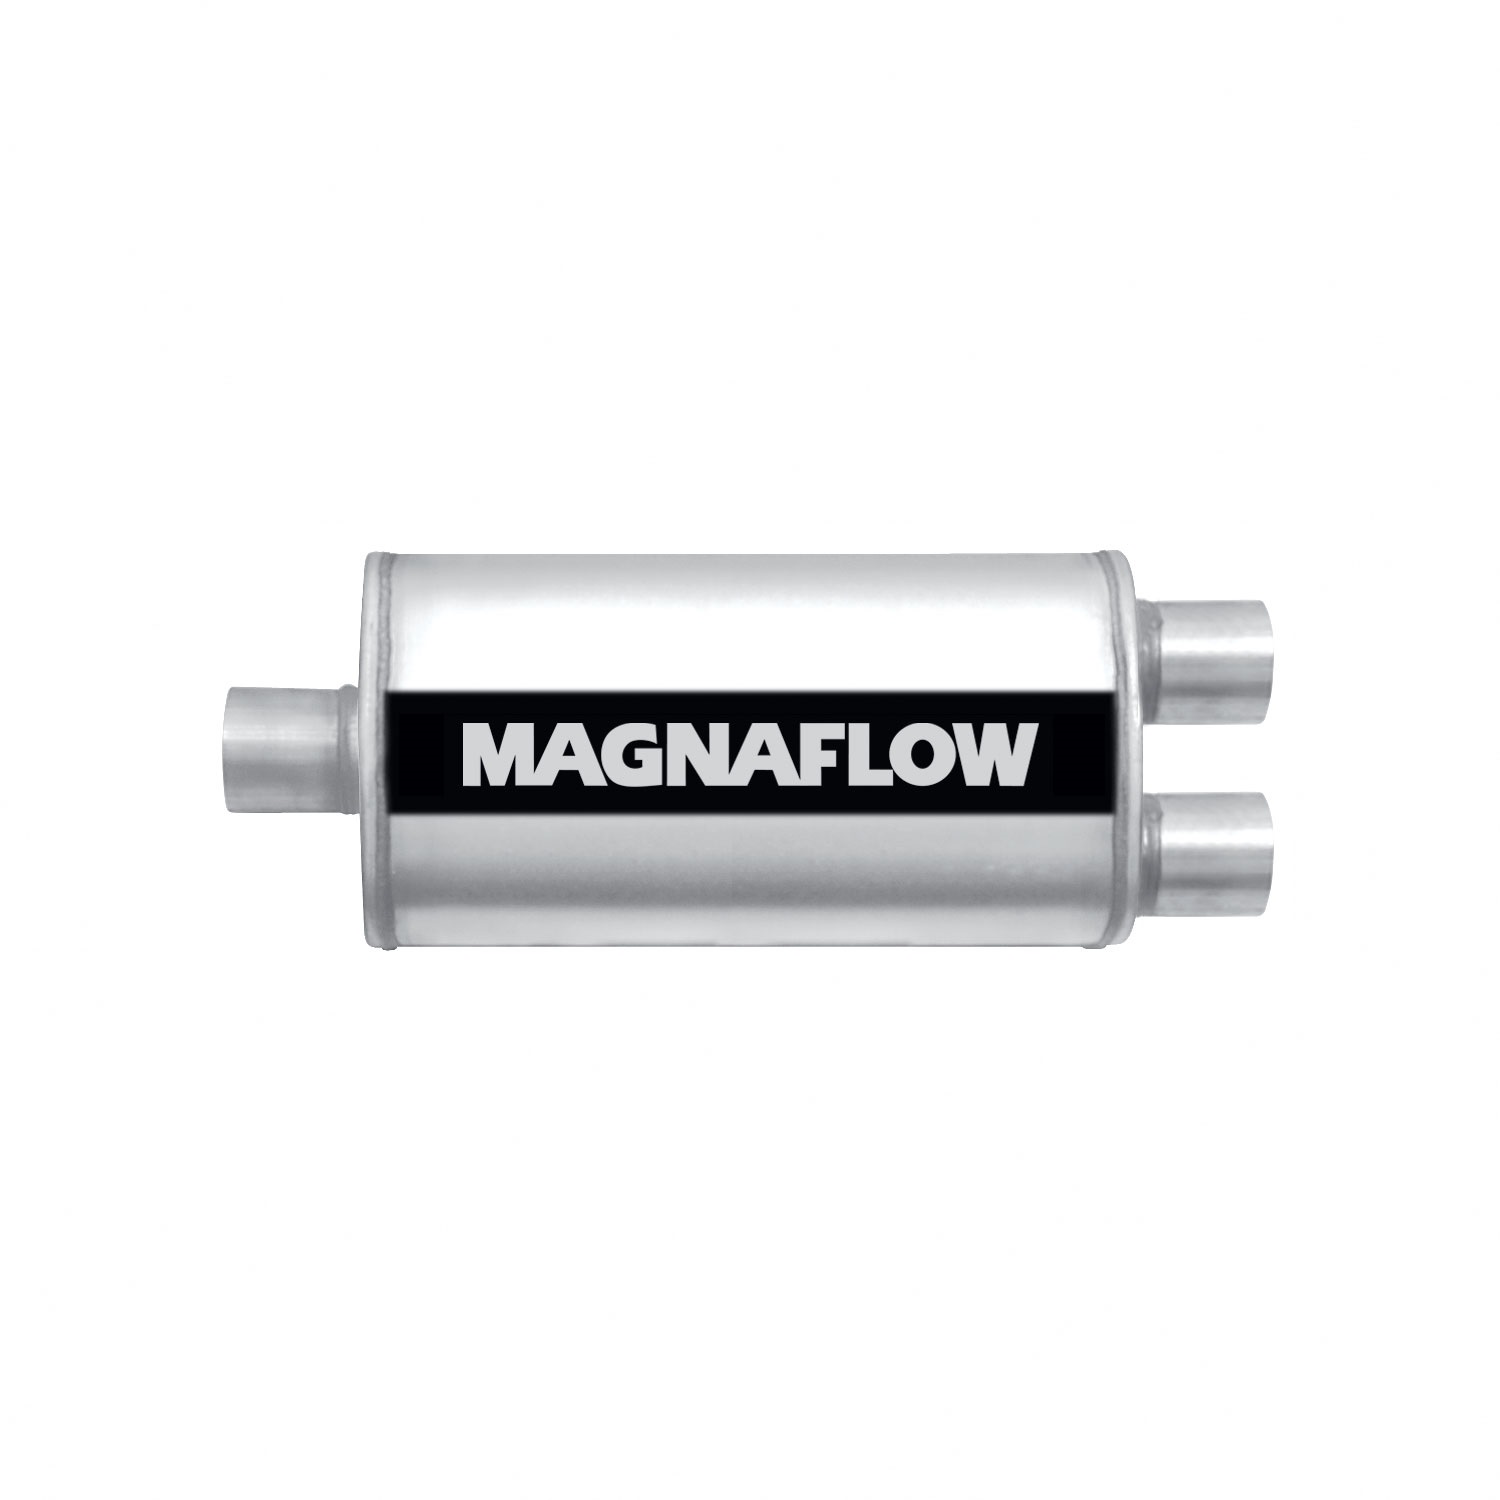 Magnaflow Performance Exhaust Magnaflow Performance Exhaust 12158 Stainless Steel Muffler